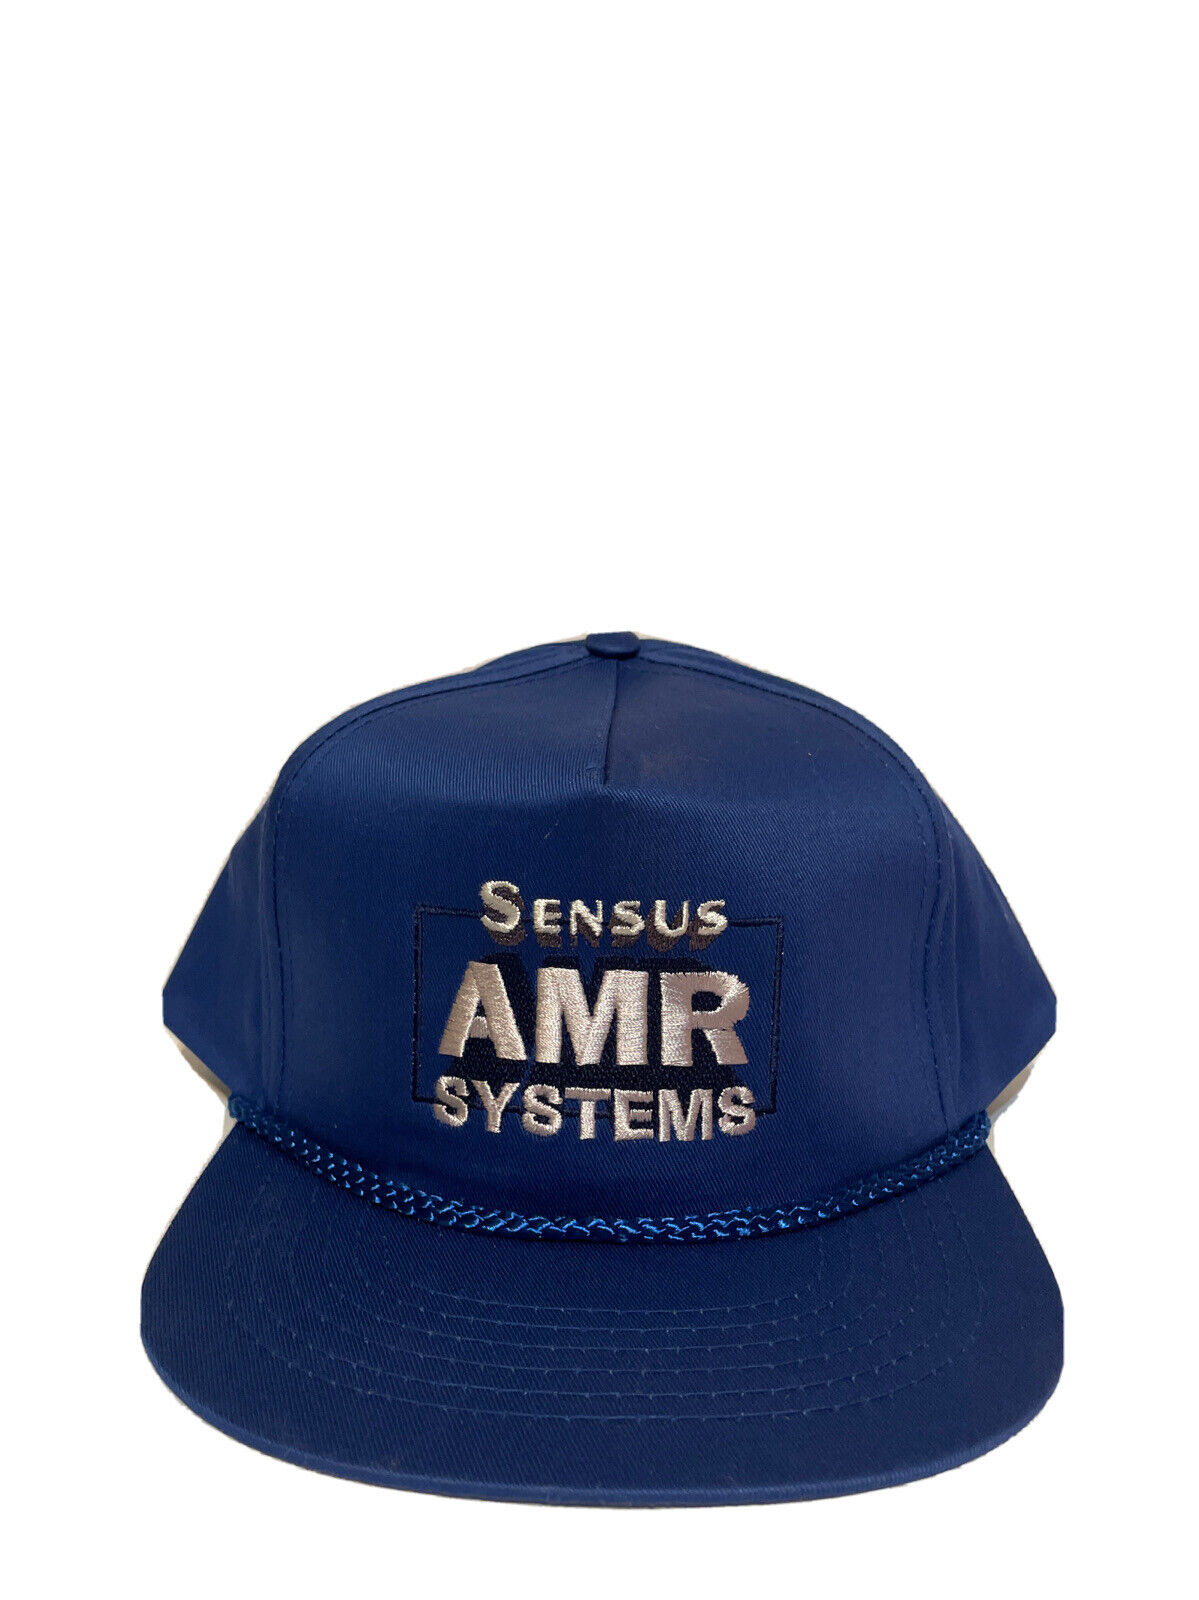 NEW Vintage SENSUS AMR SYSTEMS Blue & White Snapback Trucker Hat